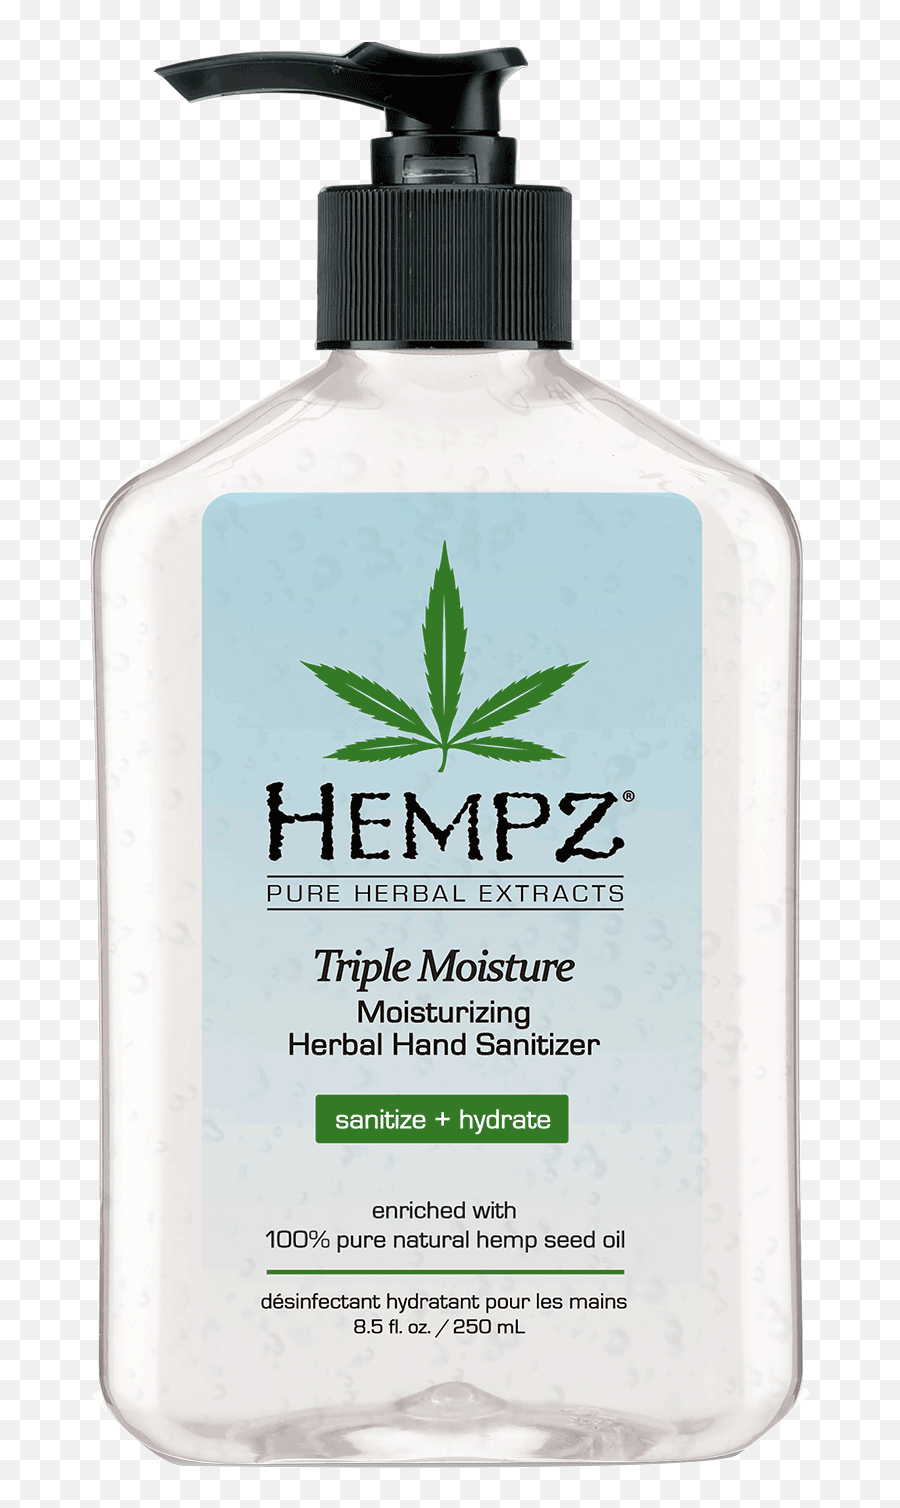 Triple Moisture Moisturizing Herbal Hand Sanitizer - Hempz Hempz Triple Moisture Hand Sanitizer Png,Hand Sanitizer Png